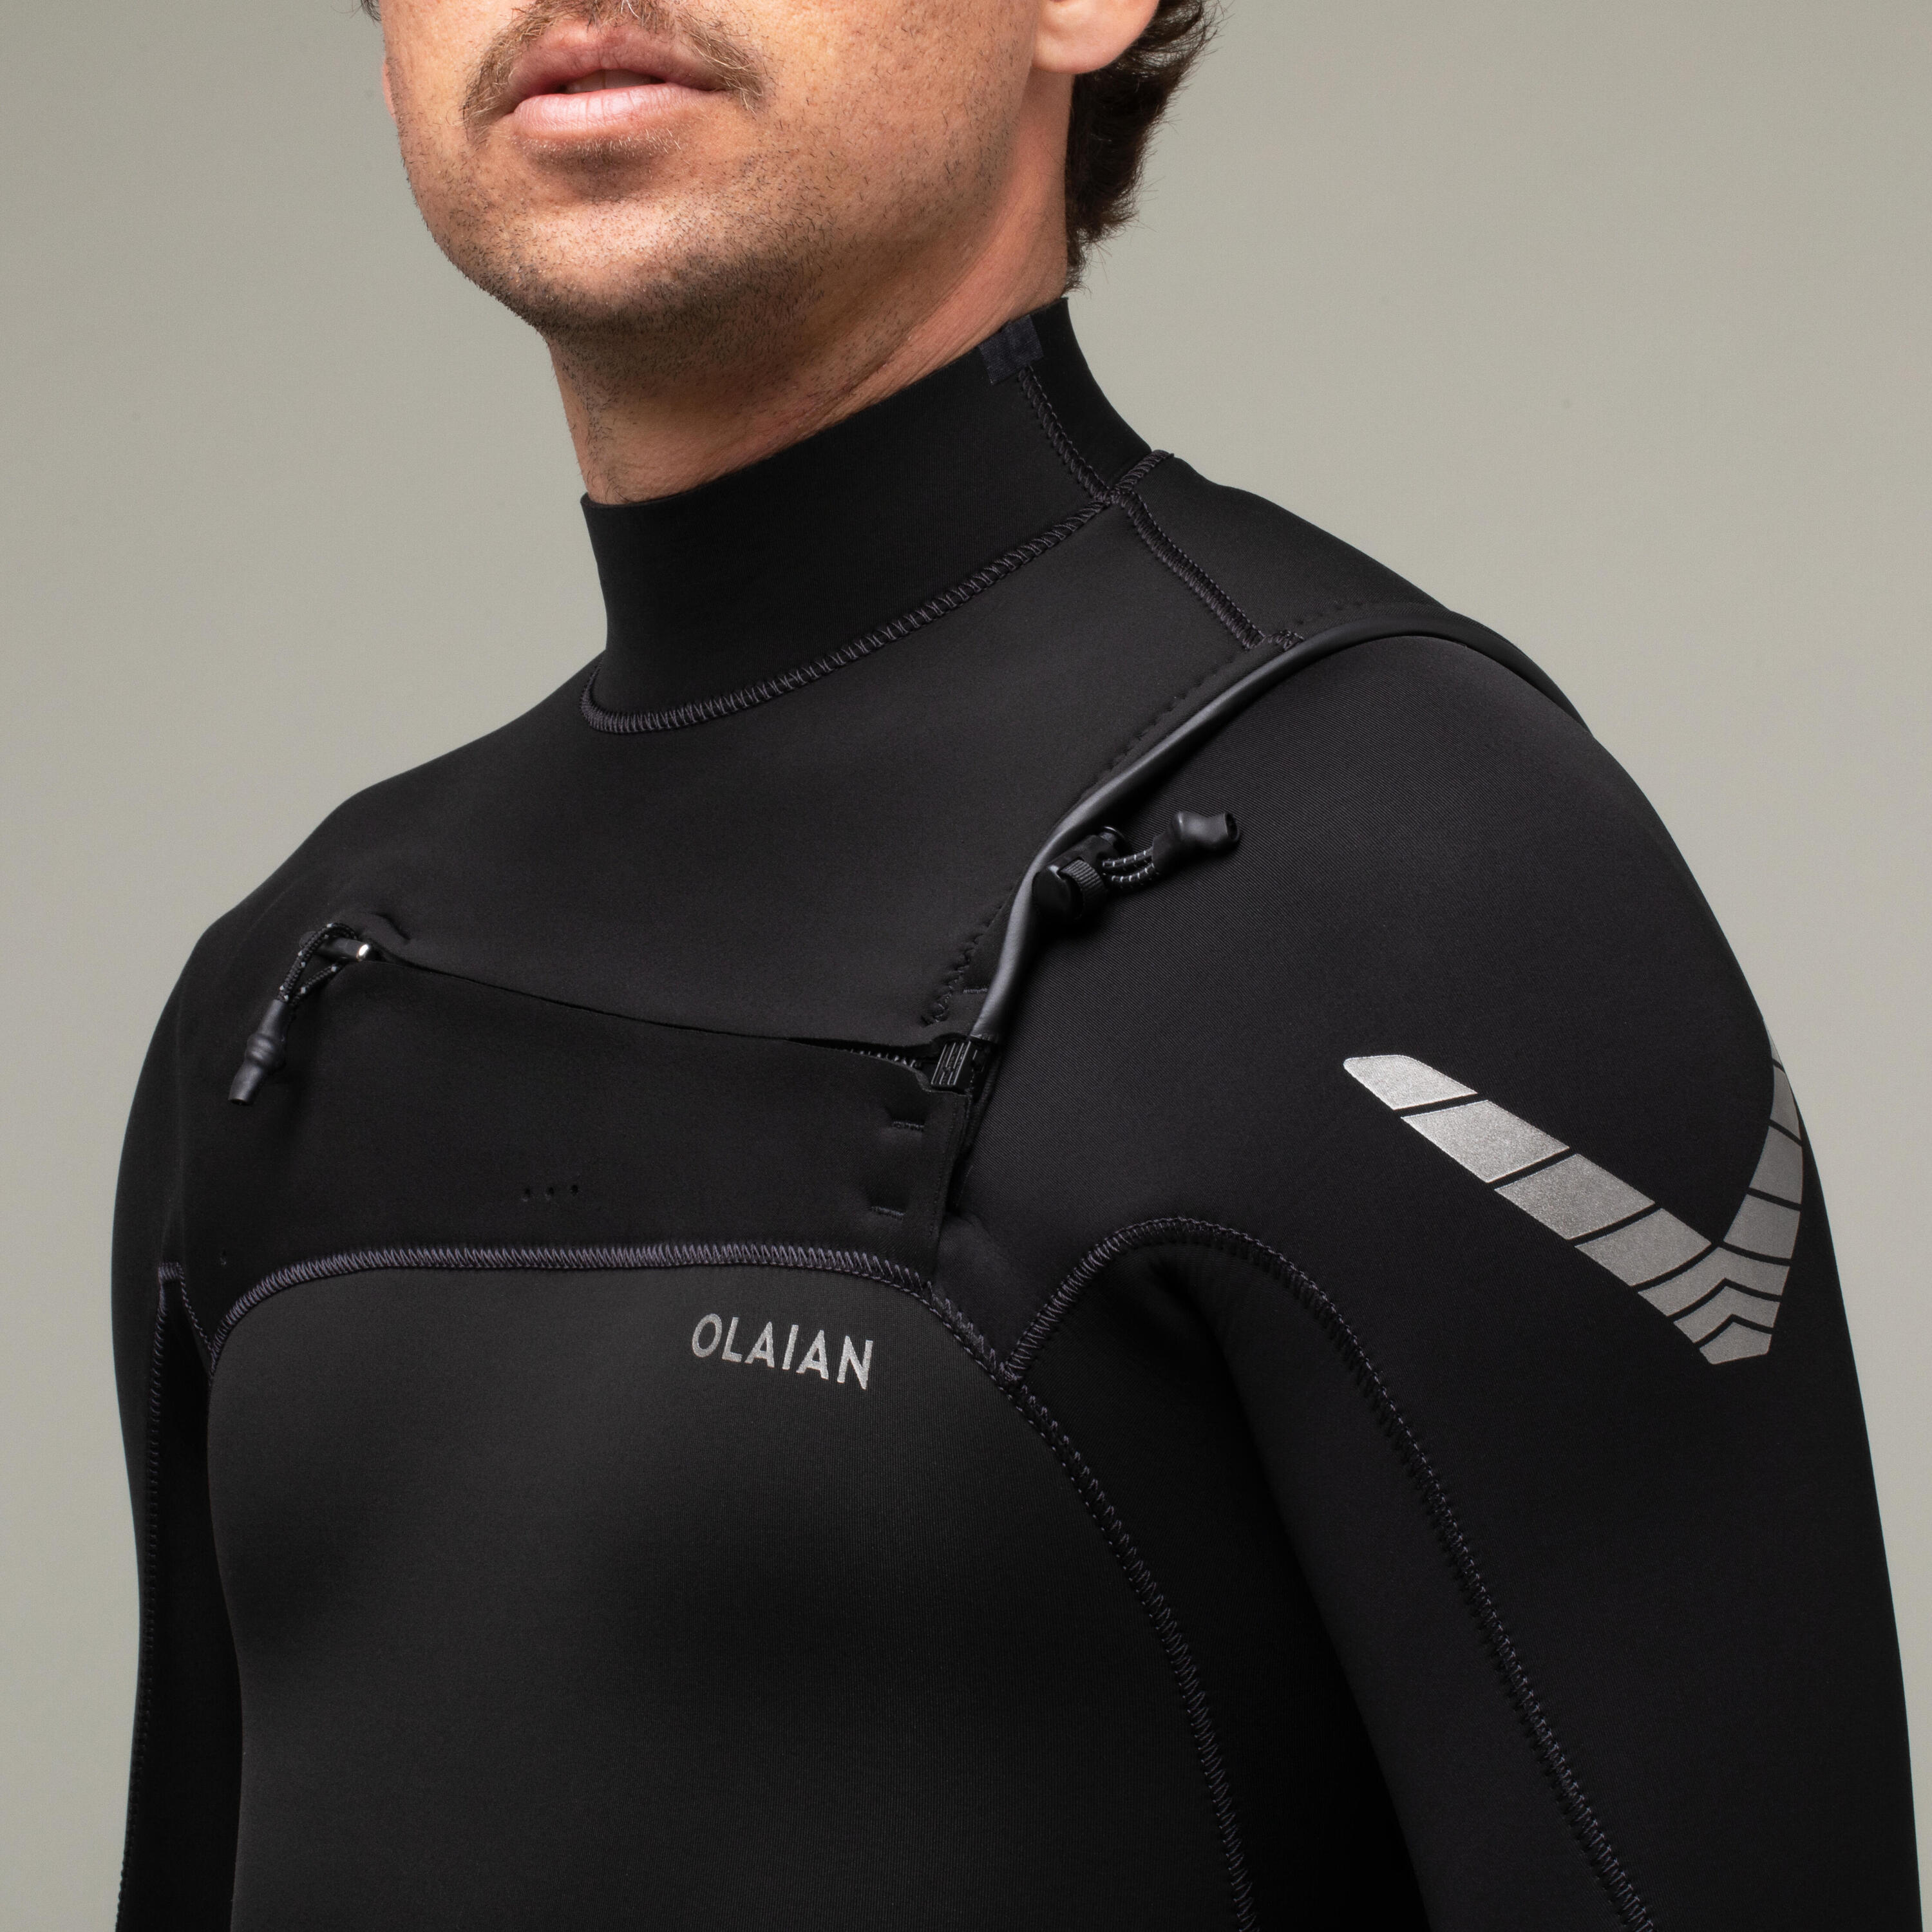 Men's surfing 4/3 mm neoprene wetsuit - 900 black 4/13